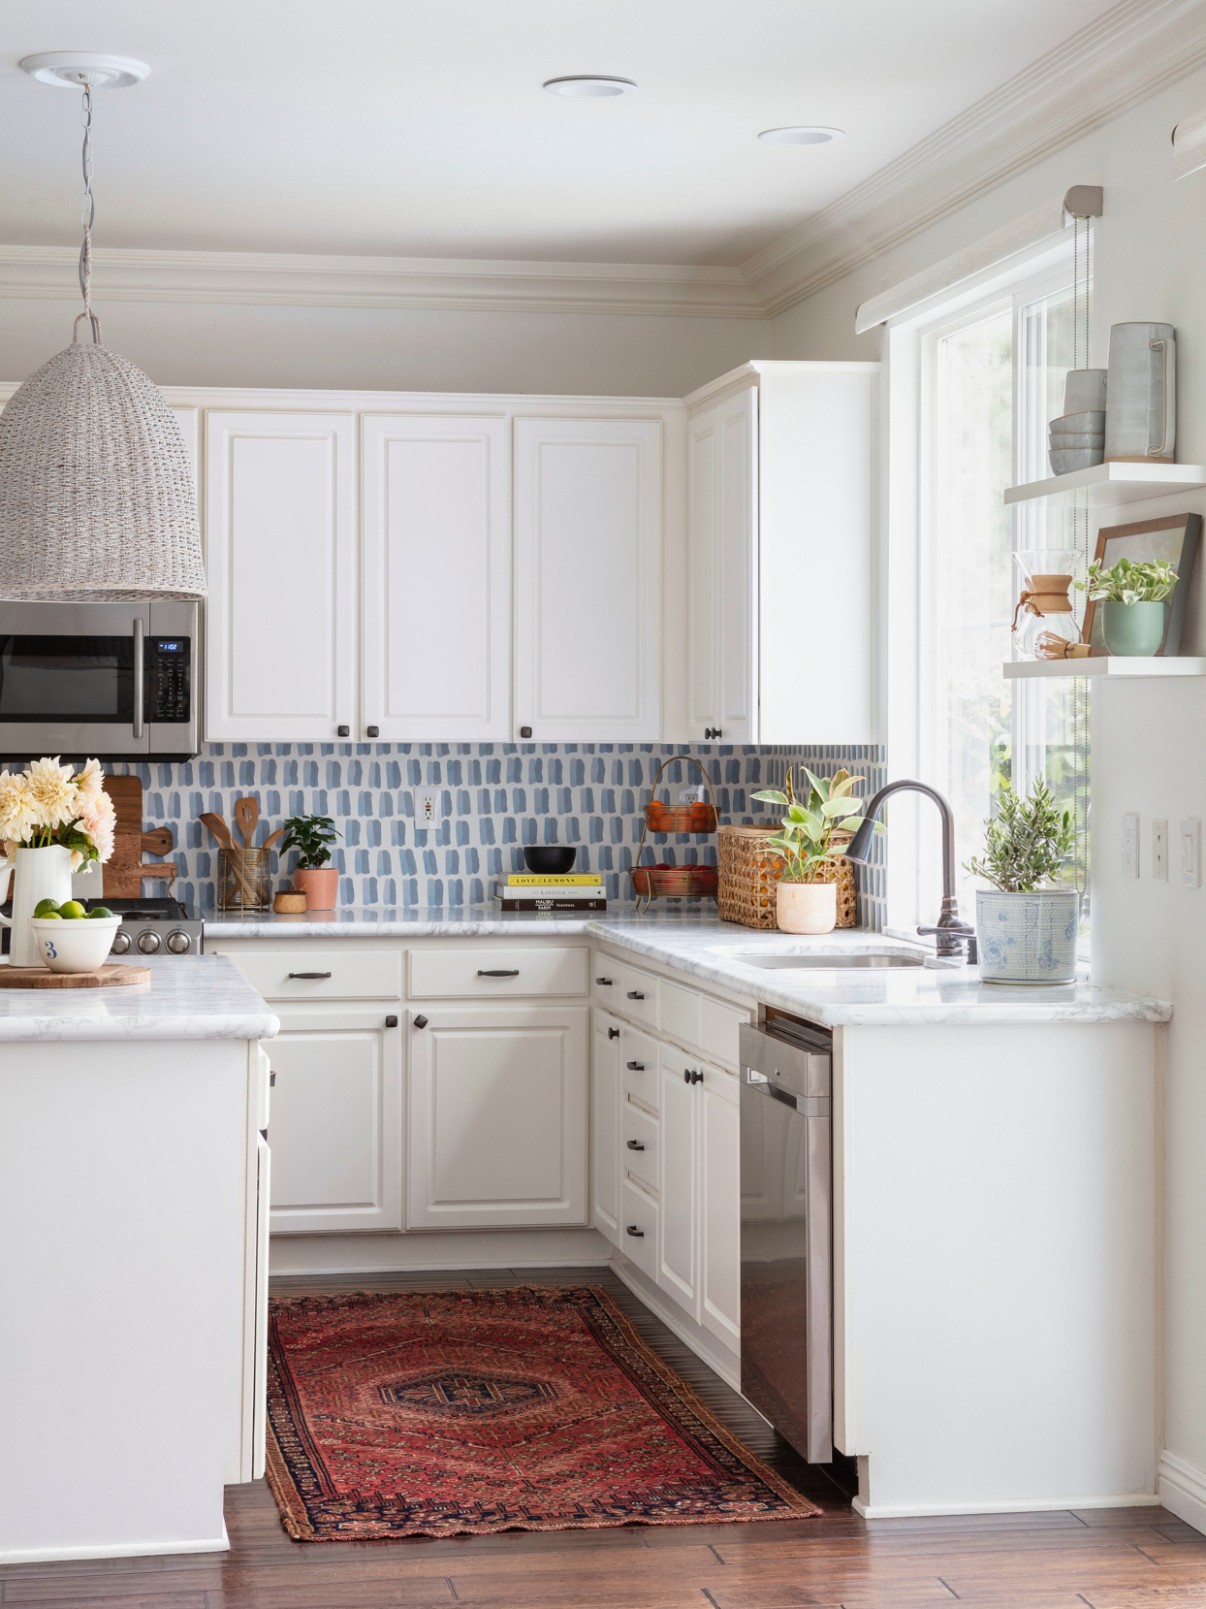 6 Small Kitchen Decor Ideas to Make a Sizzling Statement  Better  - decorate small kitchen